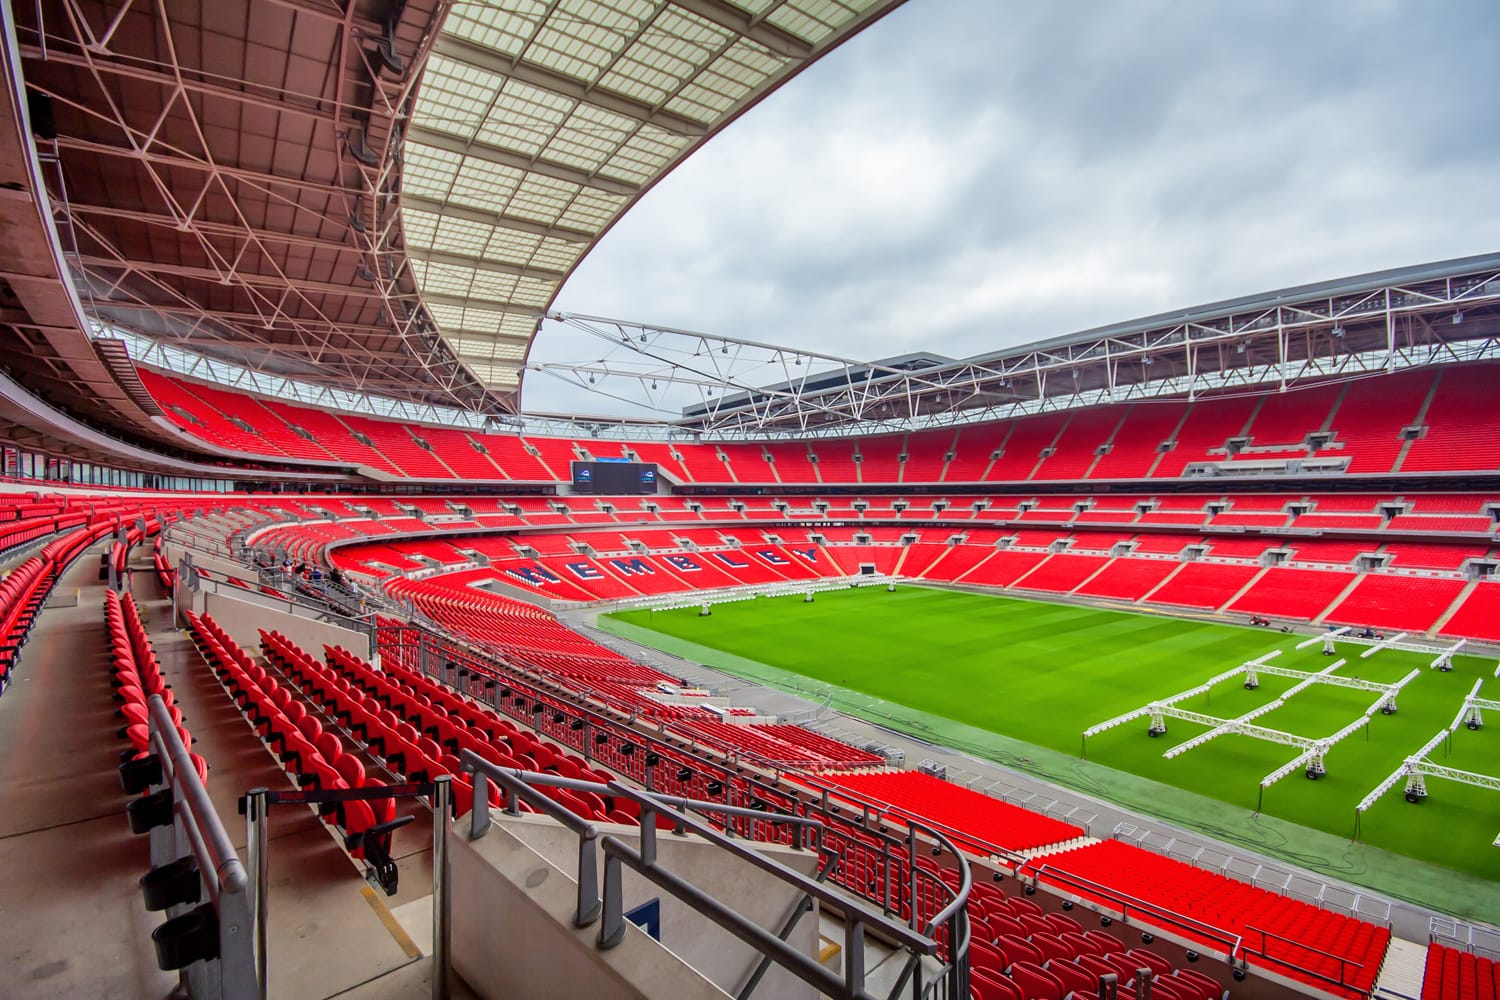 Wembley stadium in London, UK